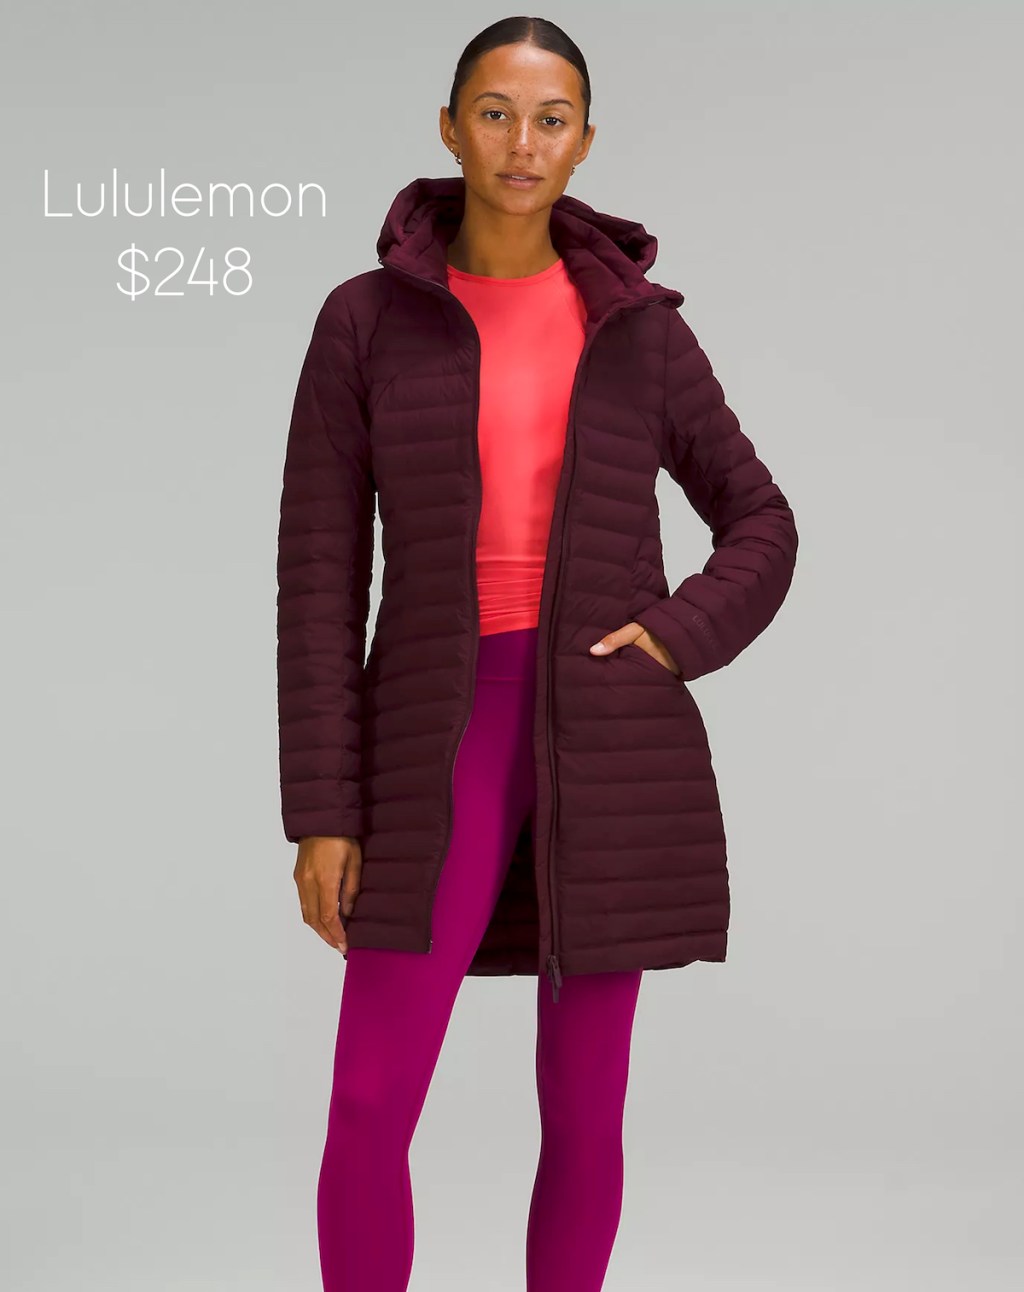 stock photo of woman wearing burgundy lululemon jacket